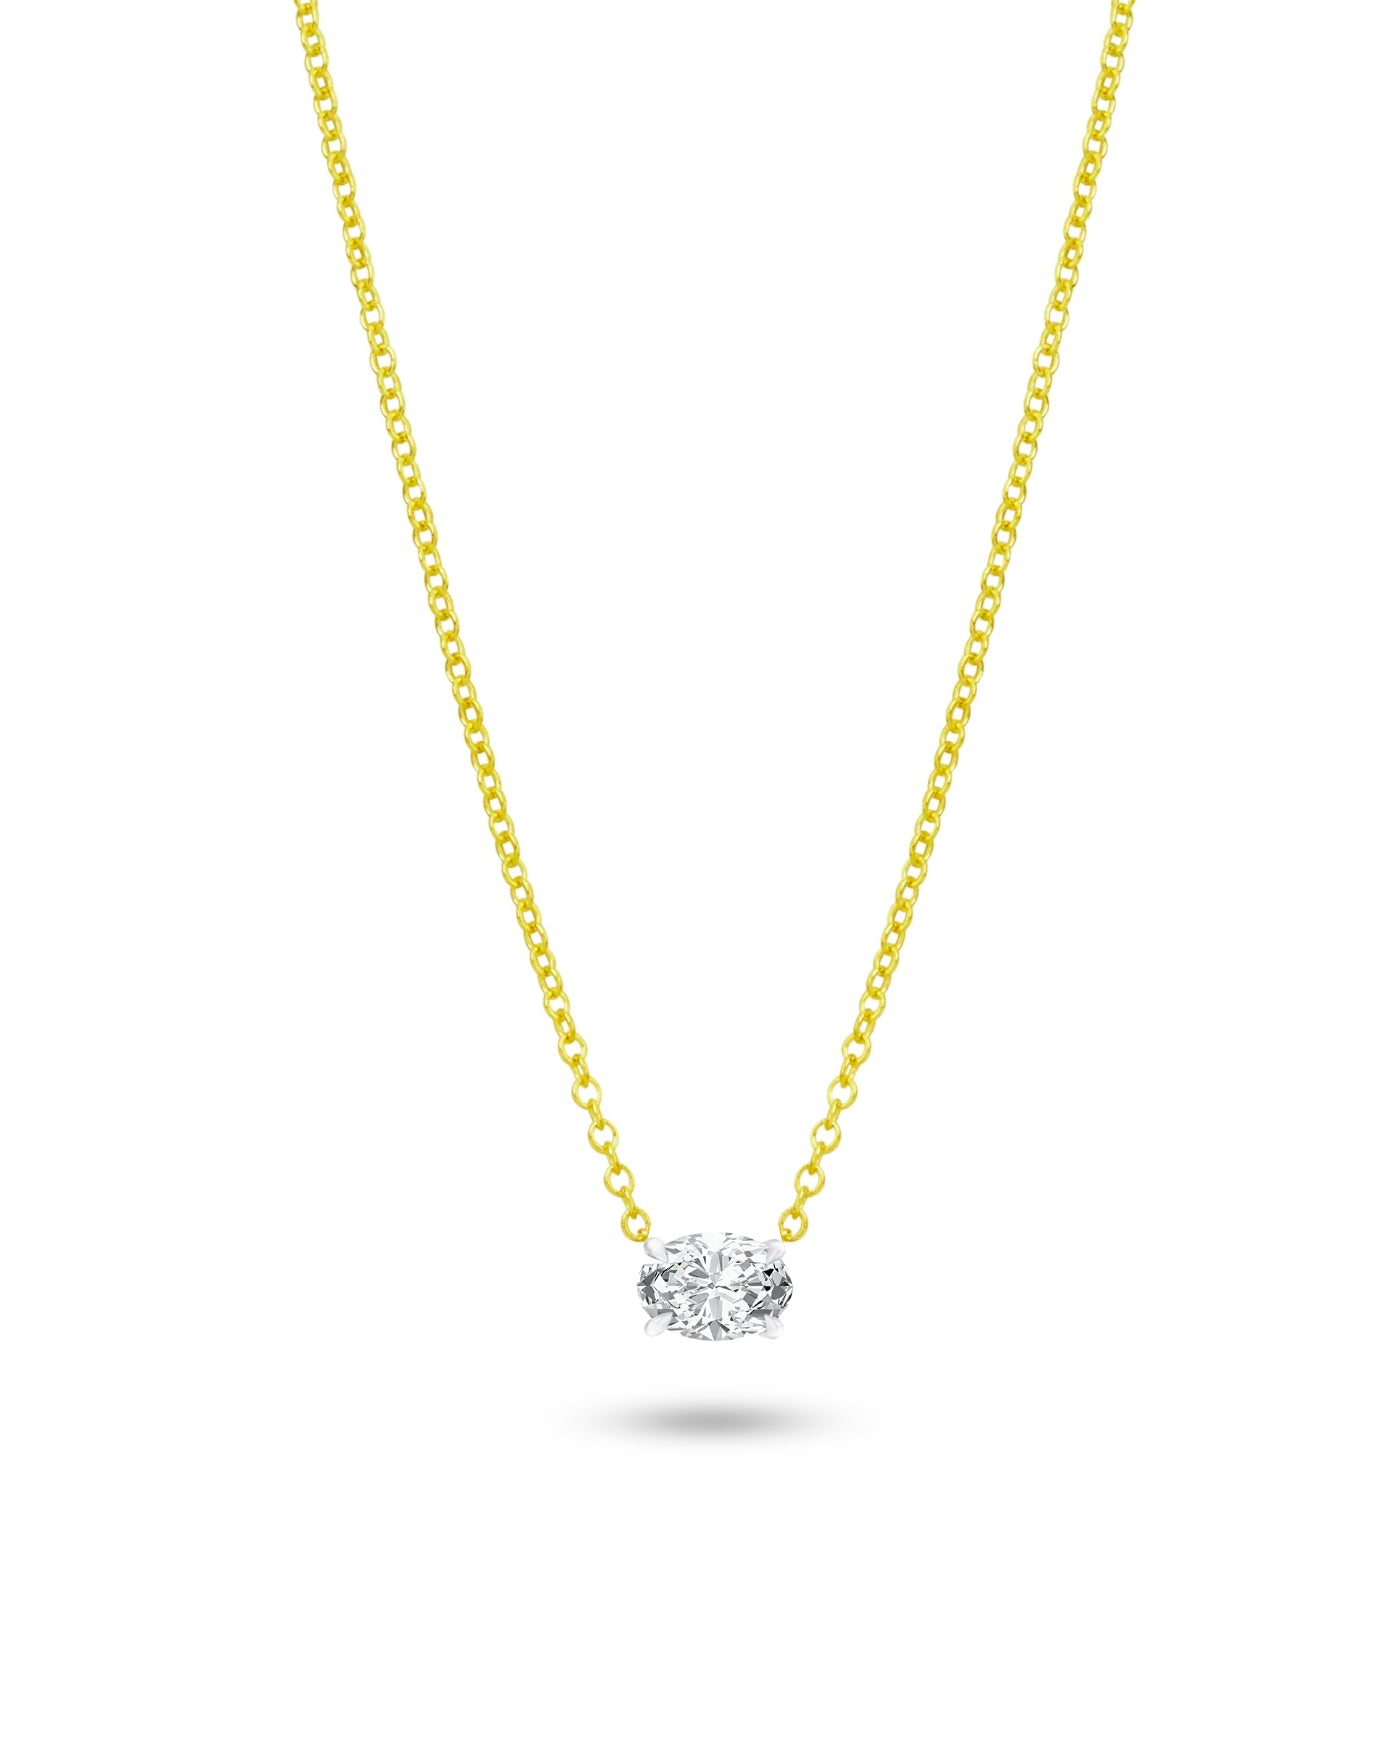 Single Stone Necklace | Oval Cut 1ct LAB Diamond